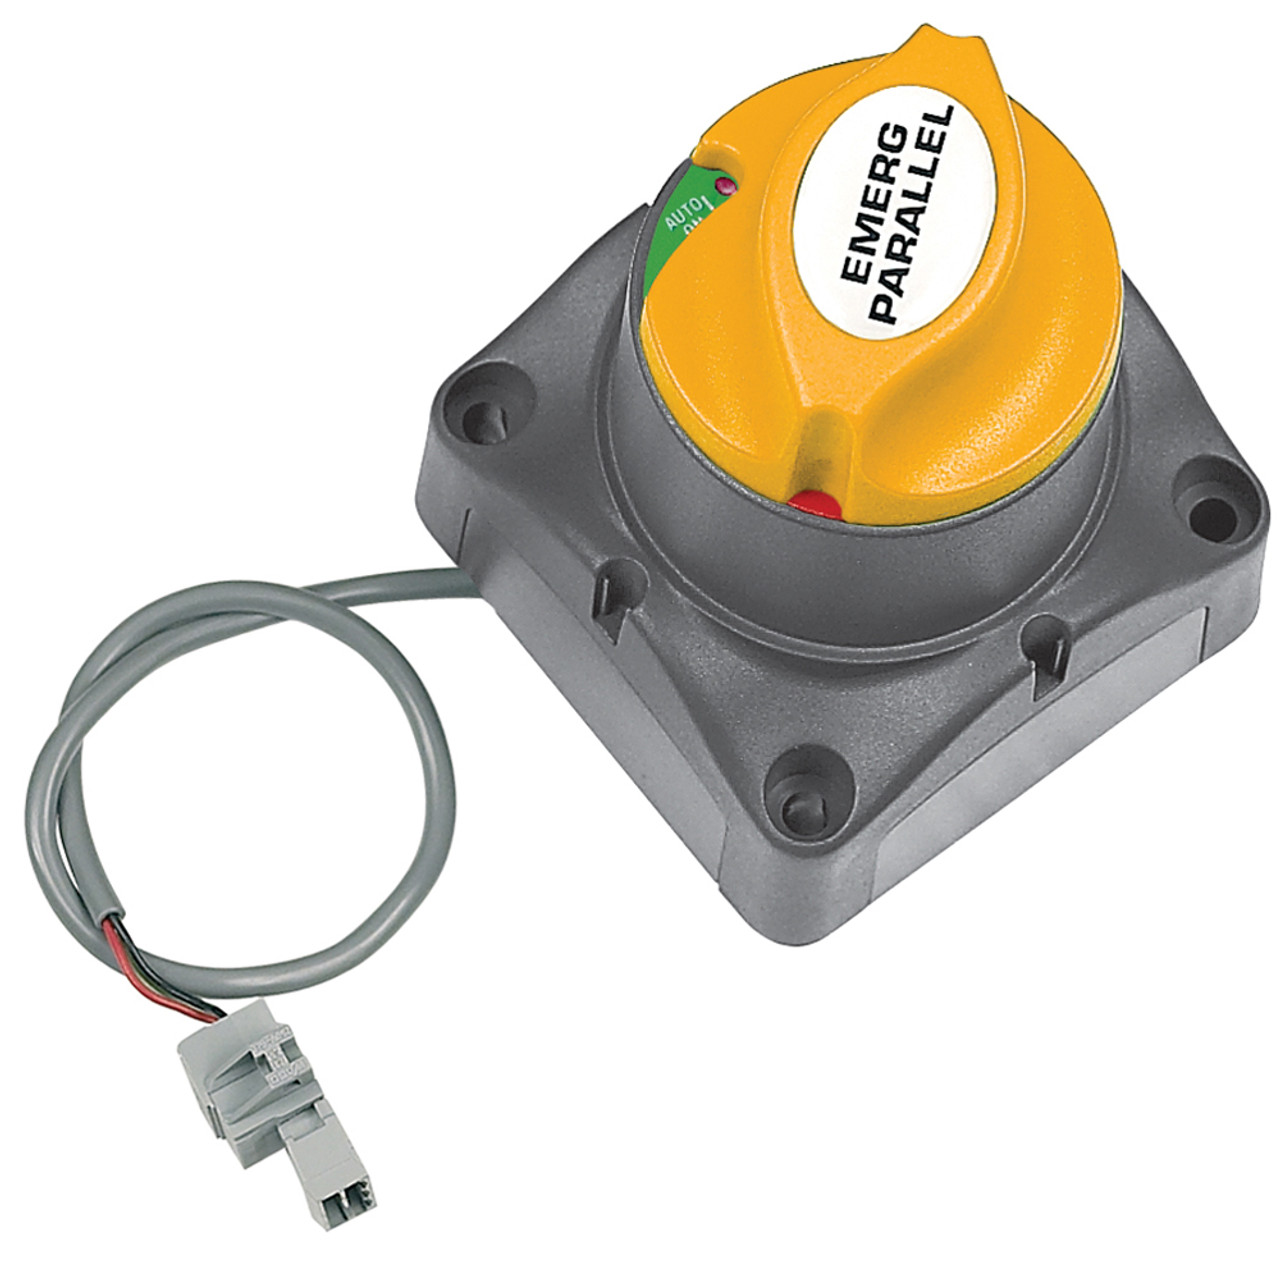 BEP Dual Operation VSS (Voltage Sensitive Switch) 275A Cont Motorized [701-MDVS-D]